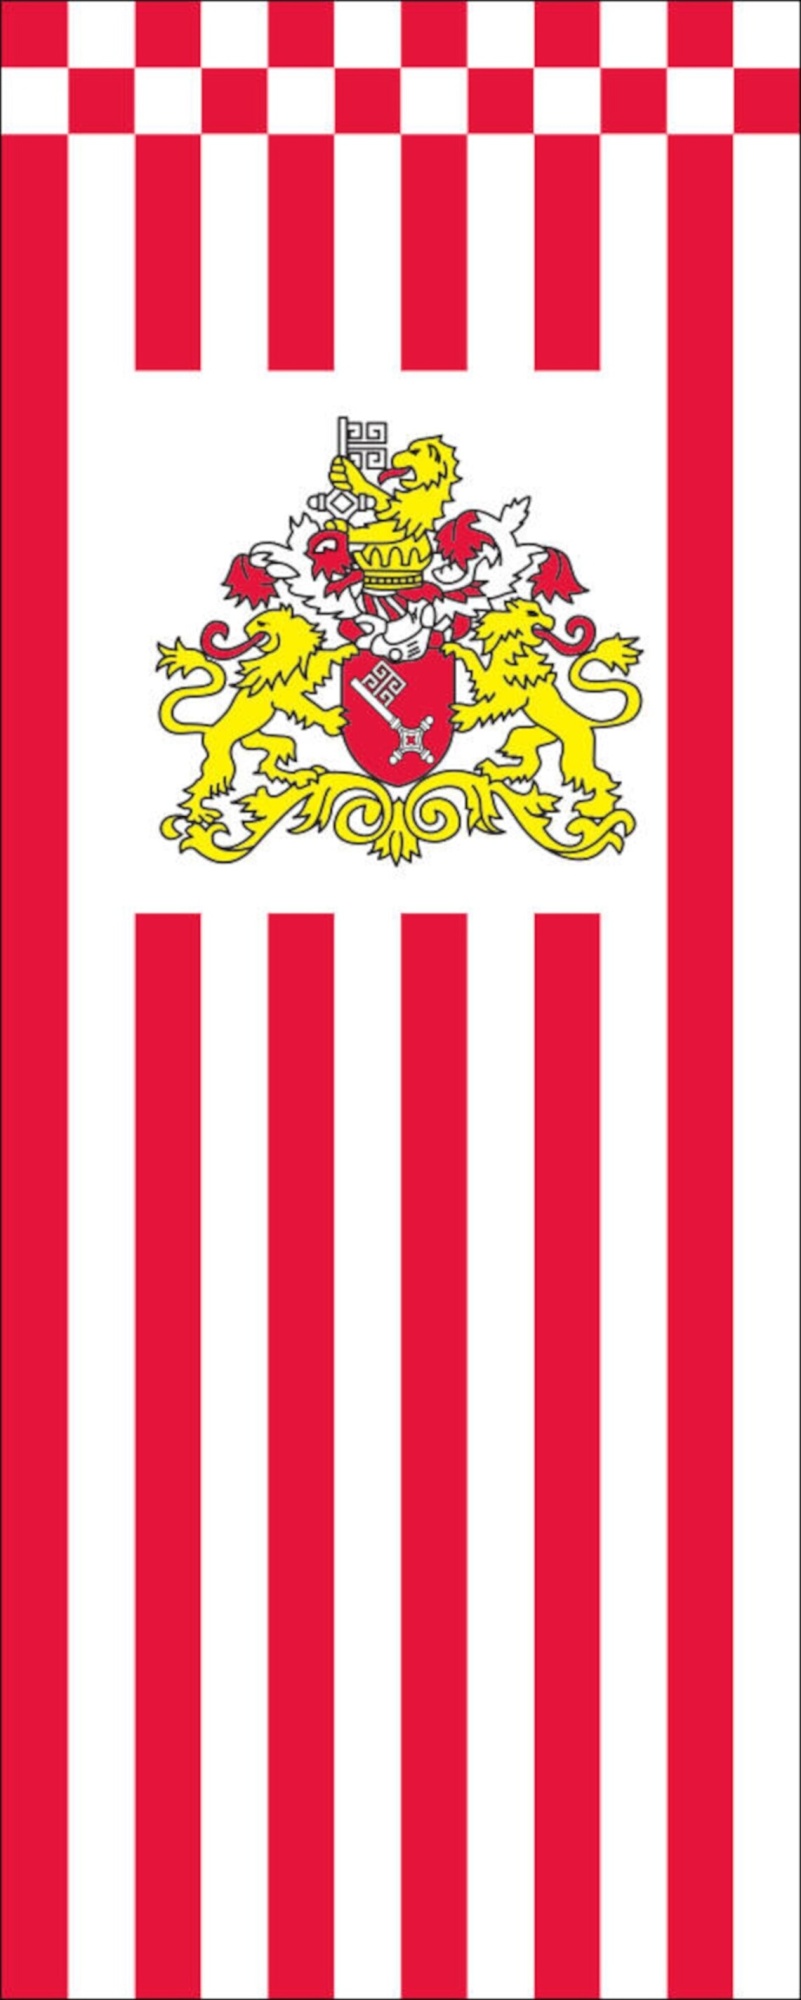 Flagge Bremer Senat